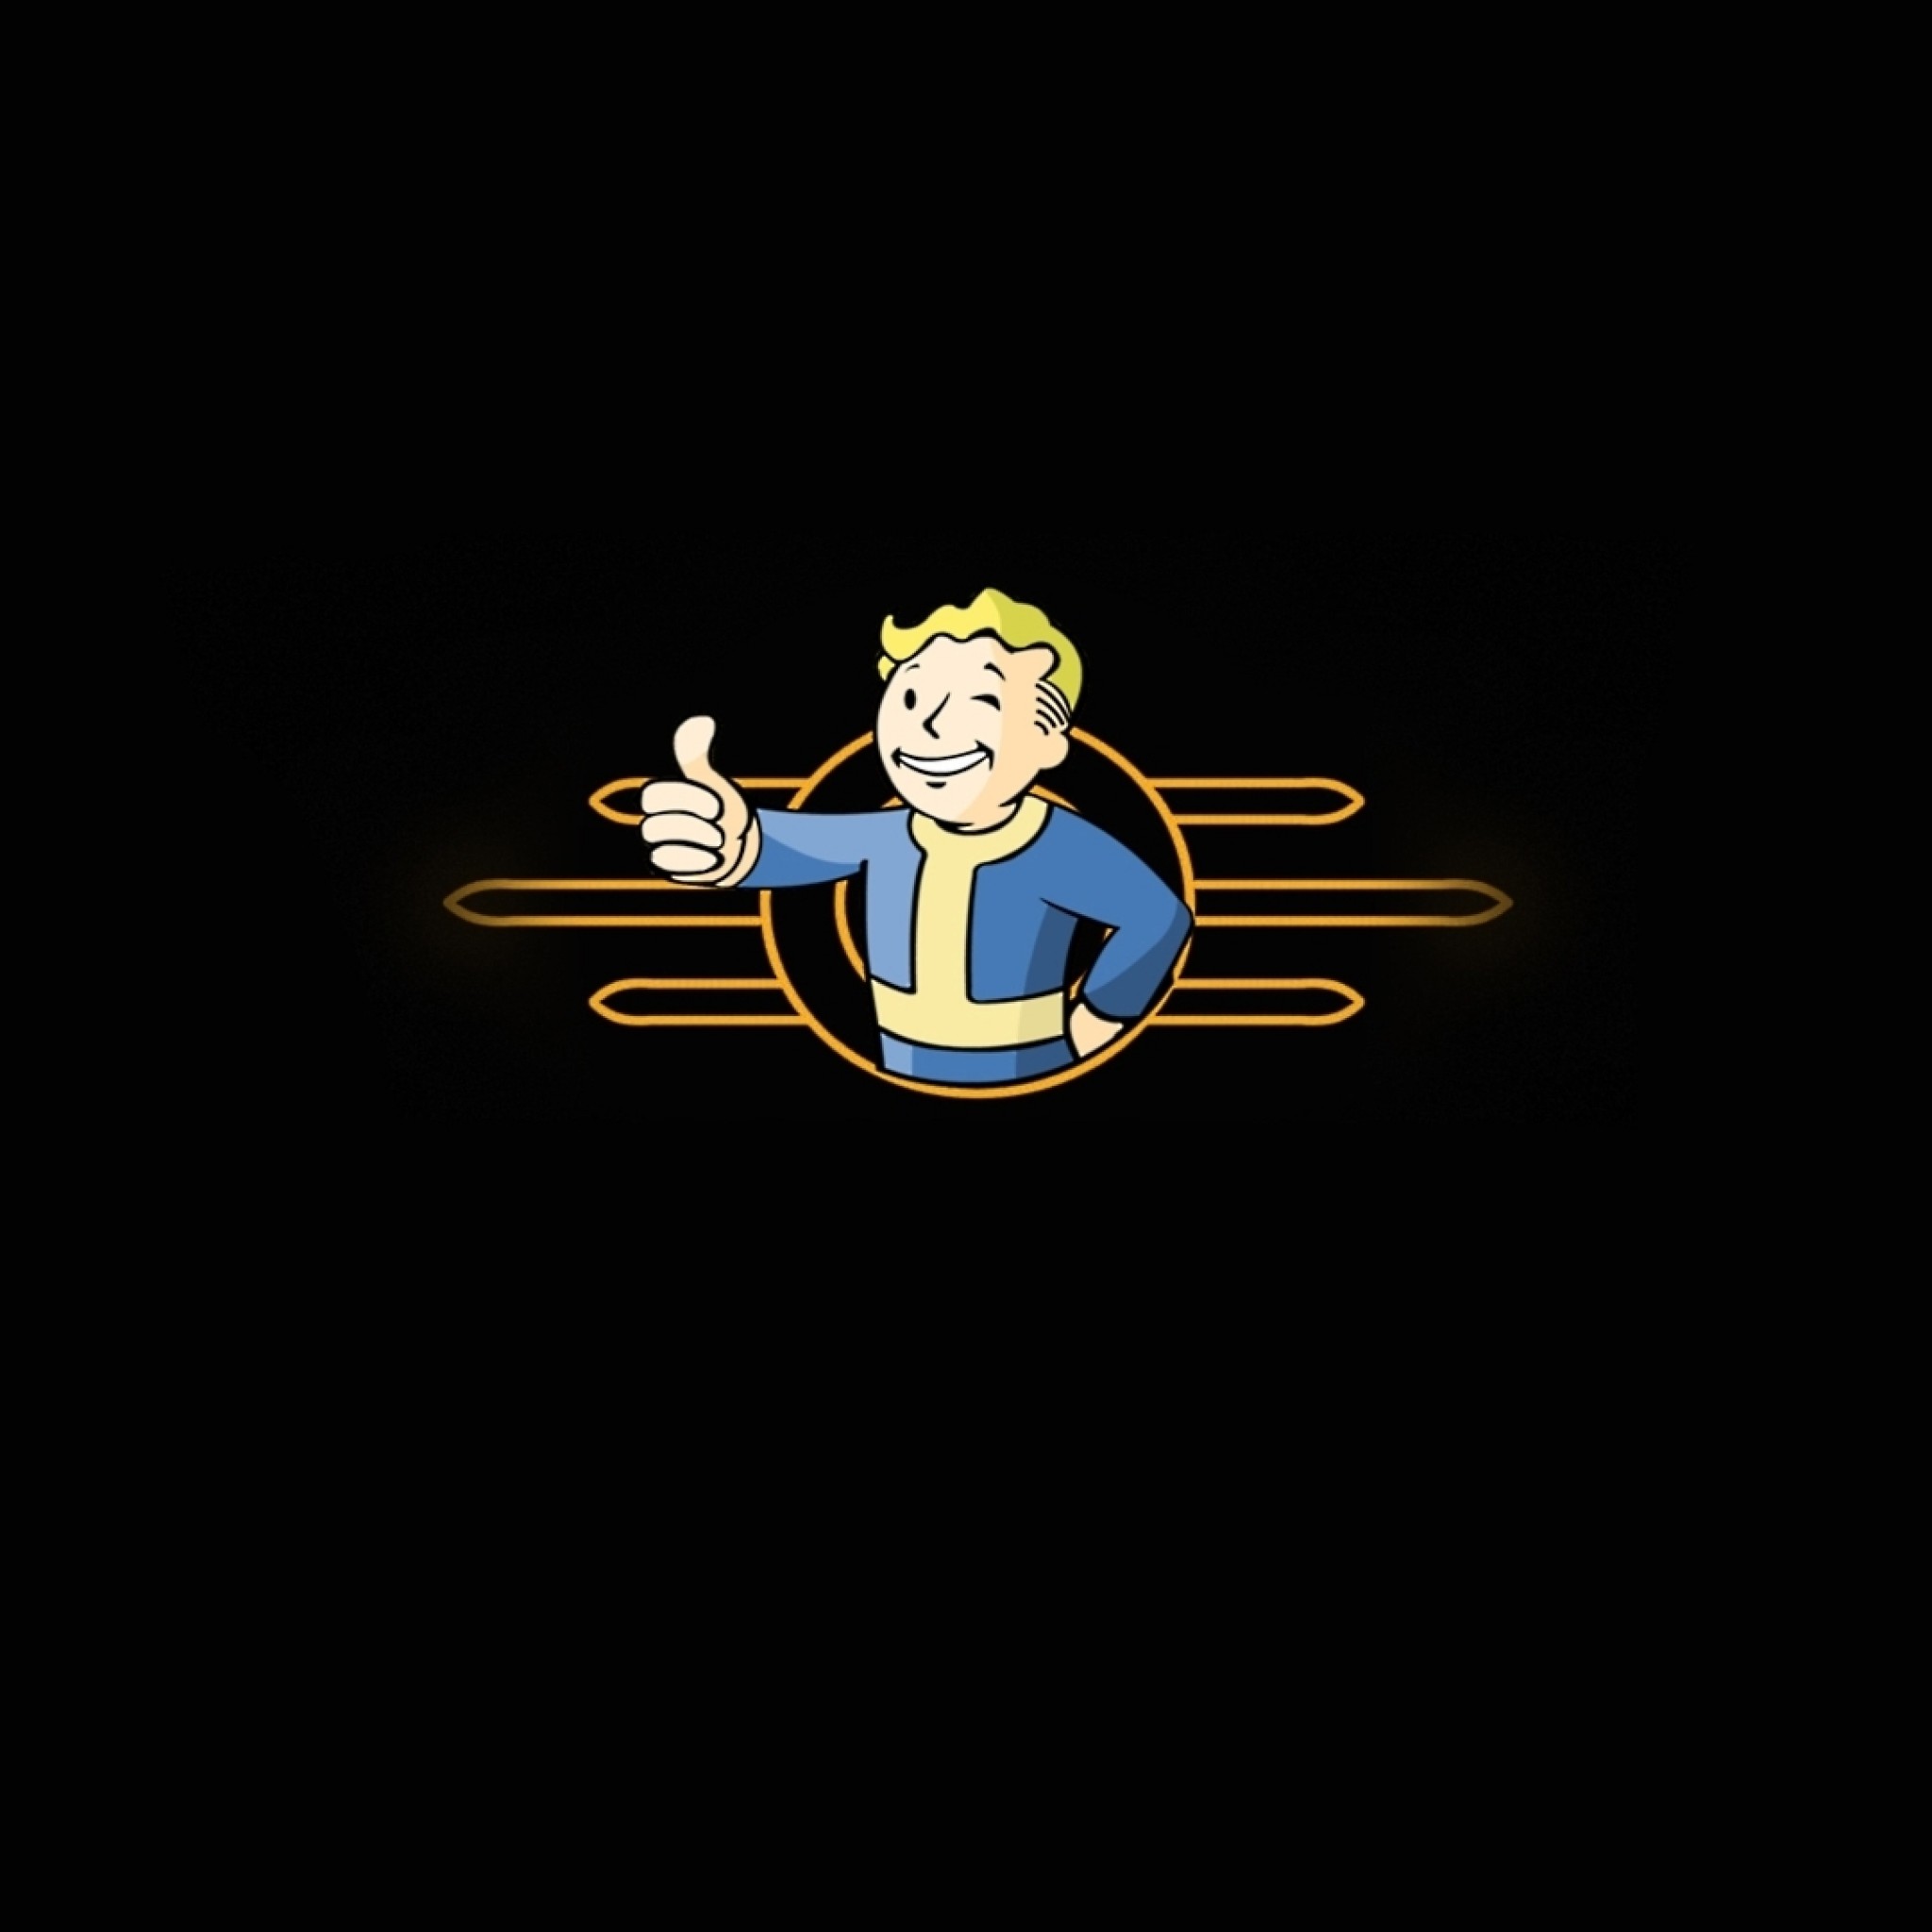 Games Fallout 3 Vault Boy Wallpapers And Backgrounds 48x48px Vault Boy Wallpaper Vault Boy Meme Vault Boy Cell Vault Boy Cartoon Ipad タブレット壁紙ギャラリー